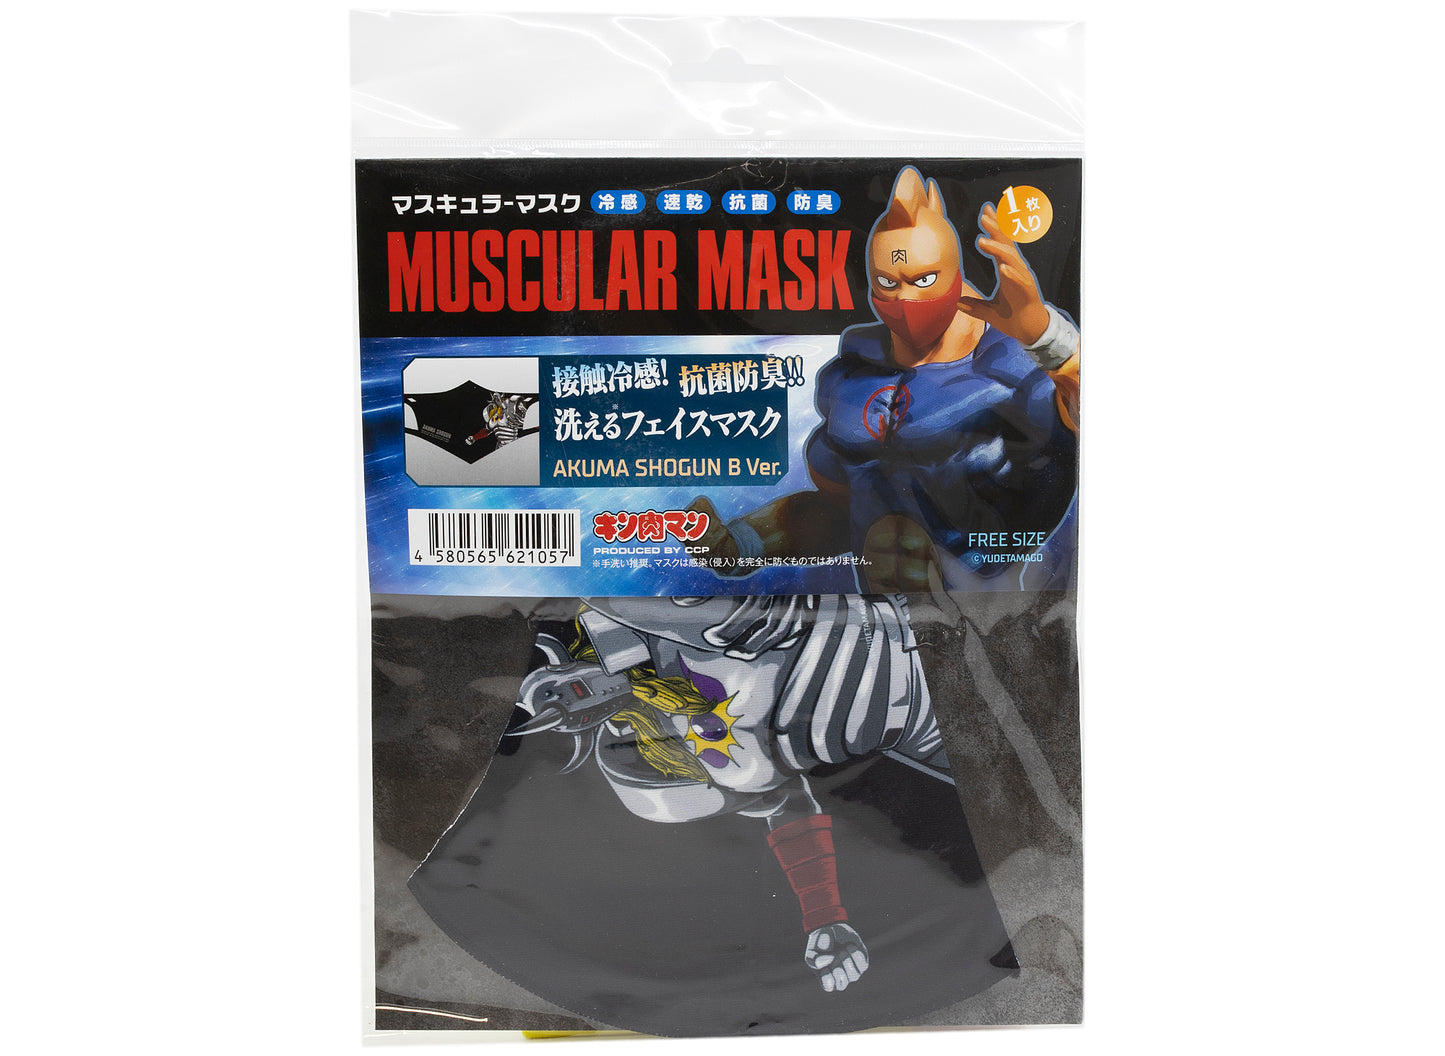 Medicom Toy AKUMASHOGUN Face Mask in Black